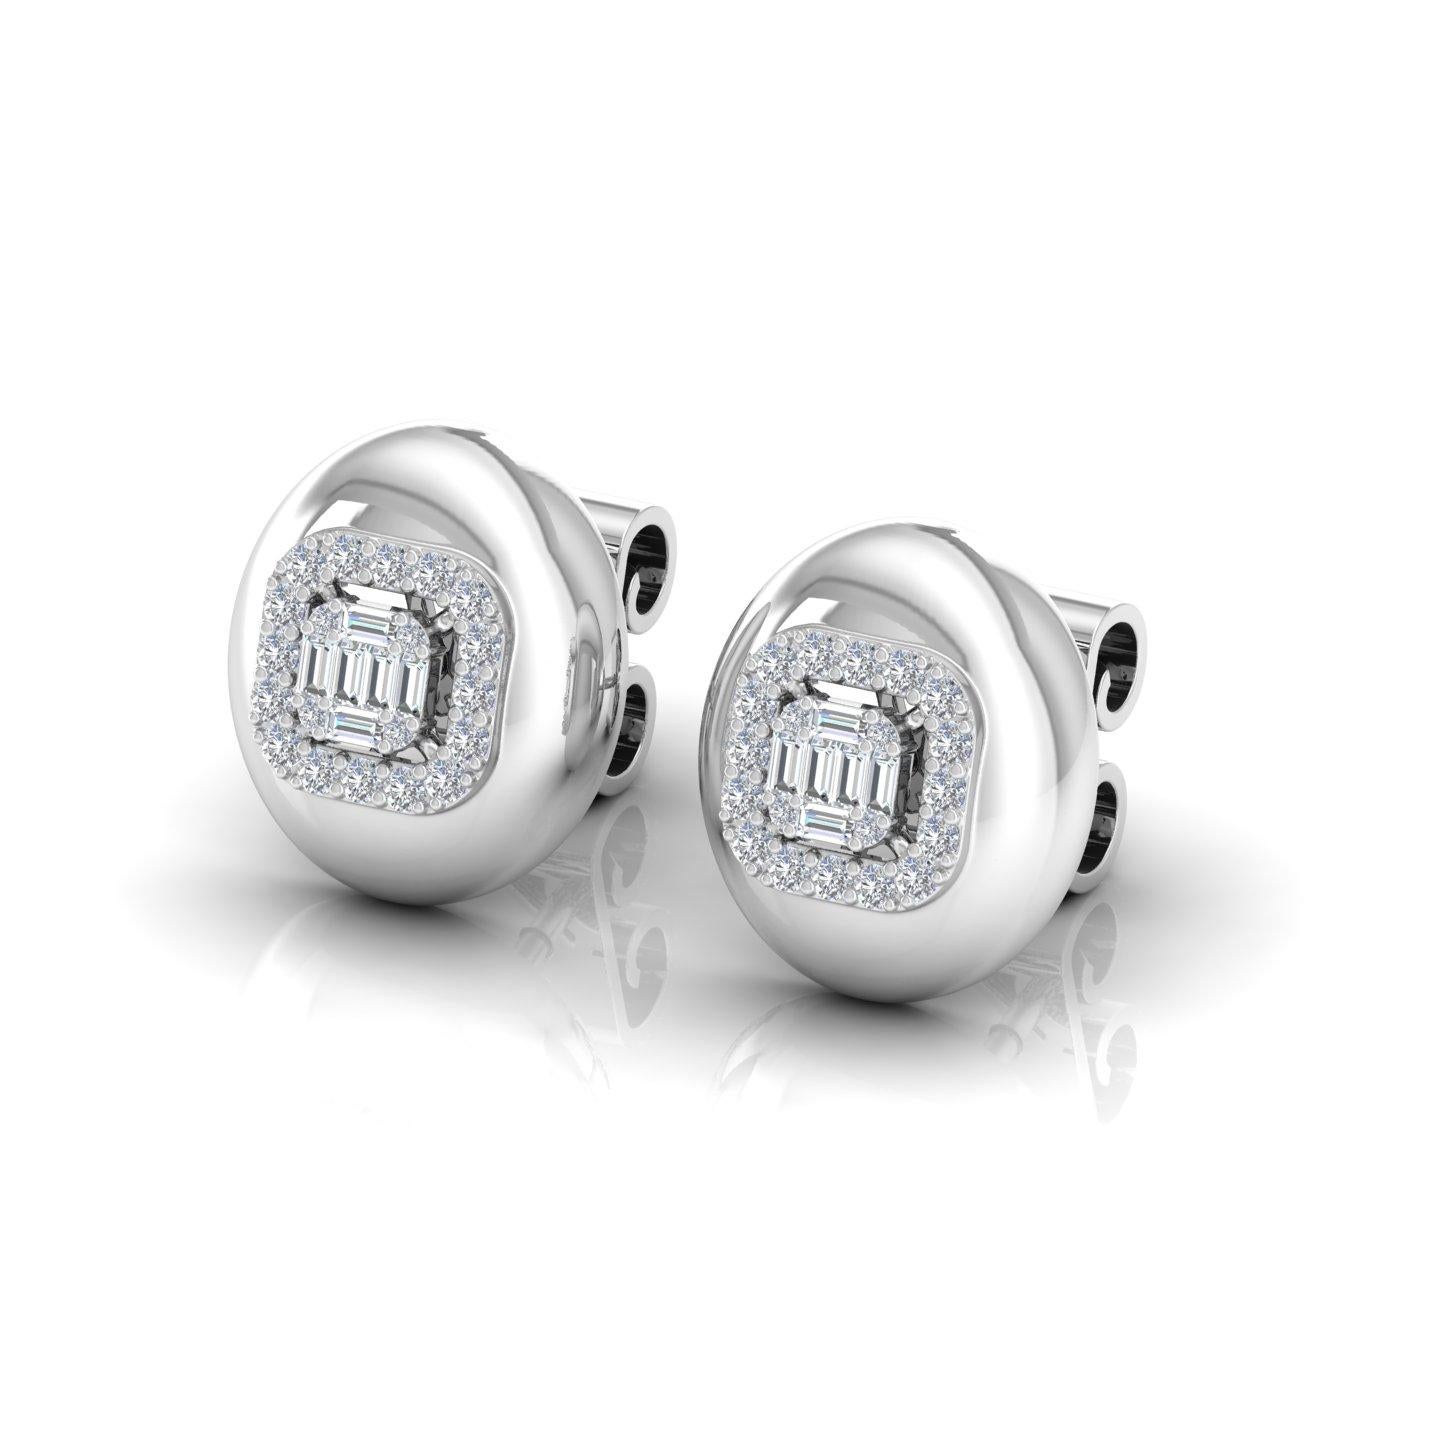 0.6 carat diamond earrings